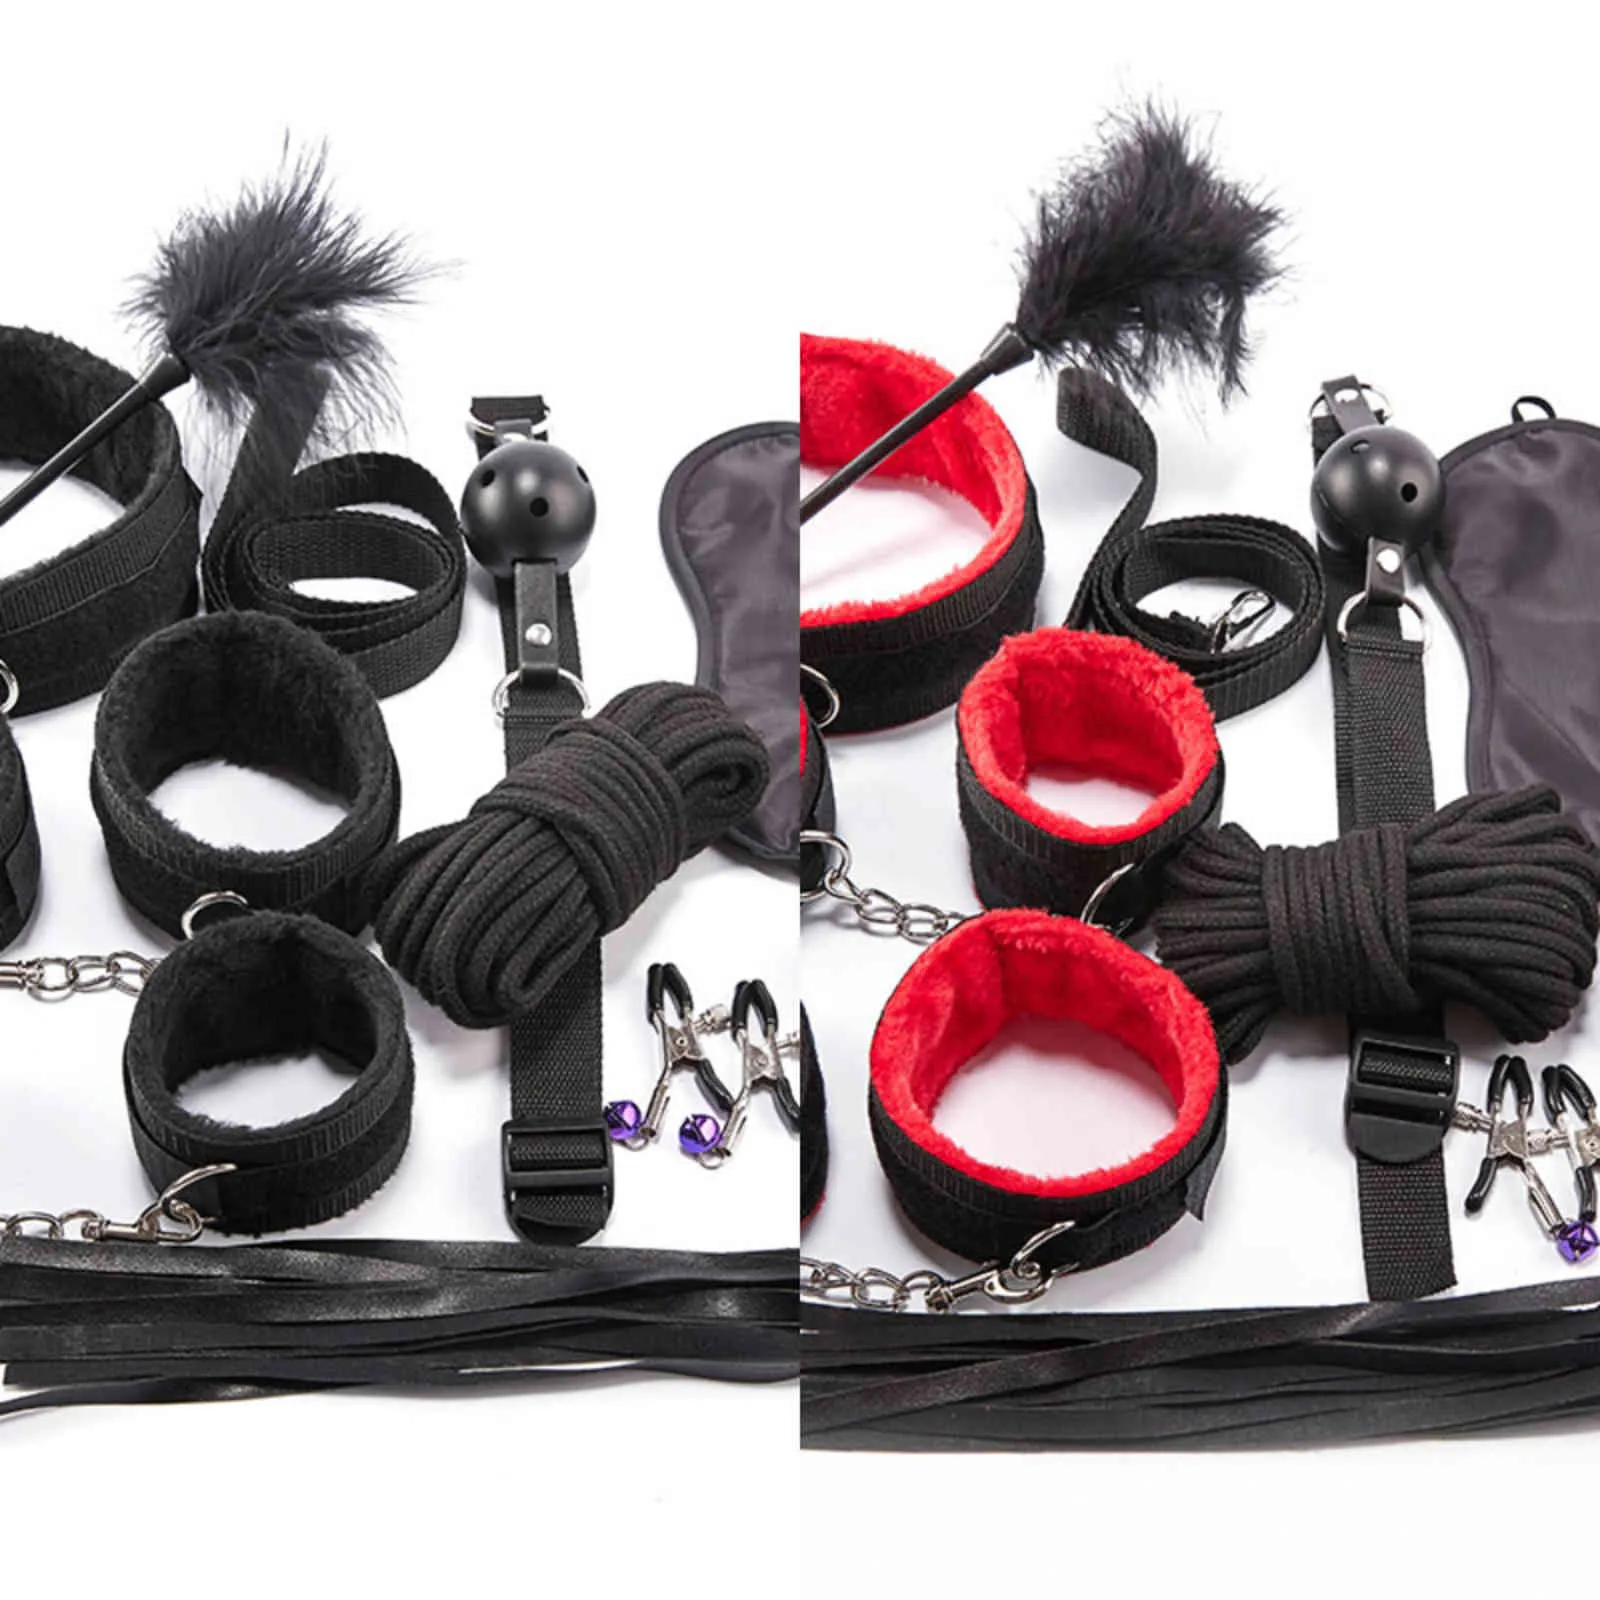 Bondages Black BDSM Kits Sex Products Erotic Toys Adults Bondage